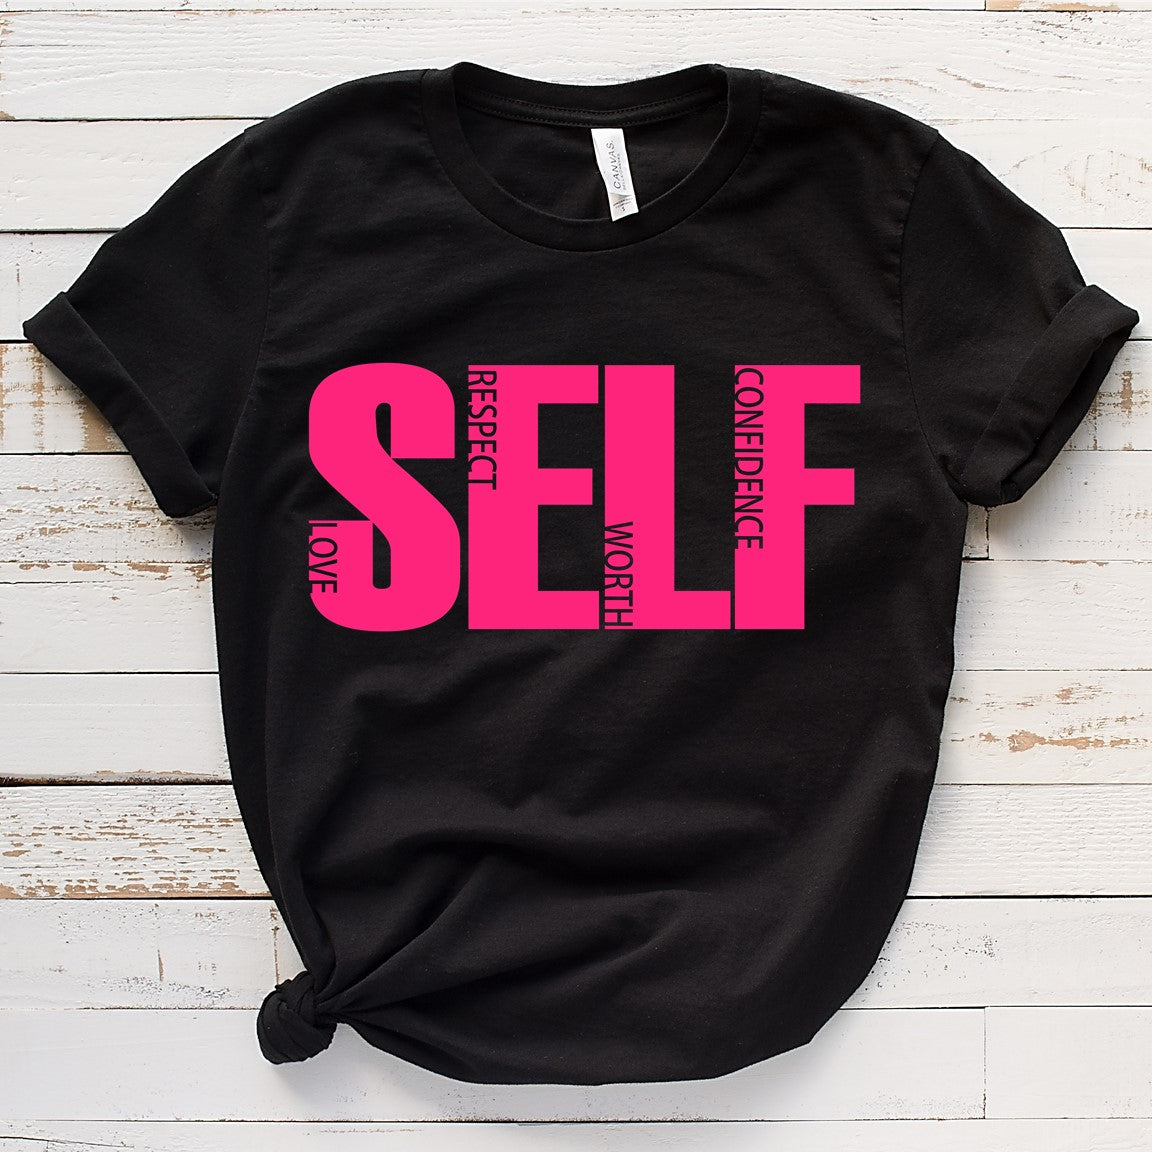 Self Love Inspirational Empowerment Black T-Shirt - Inspire Me Positive